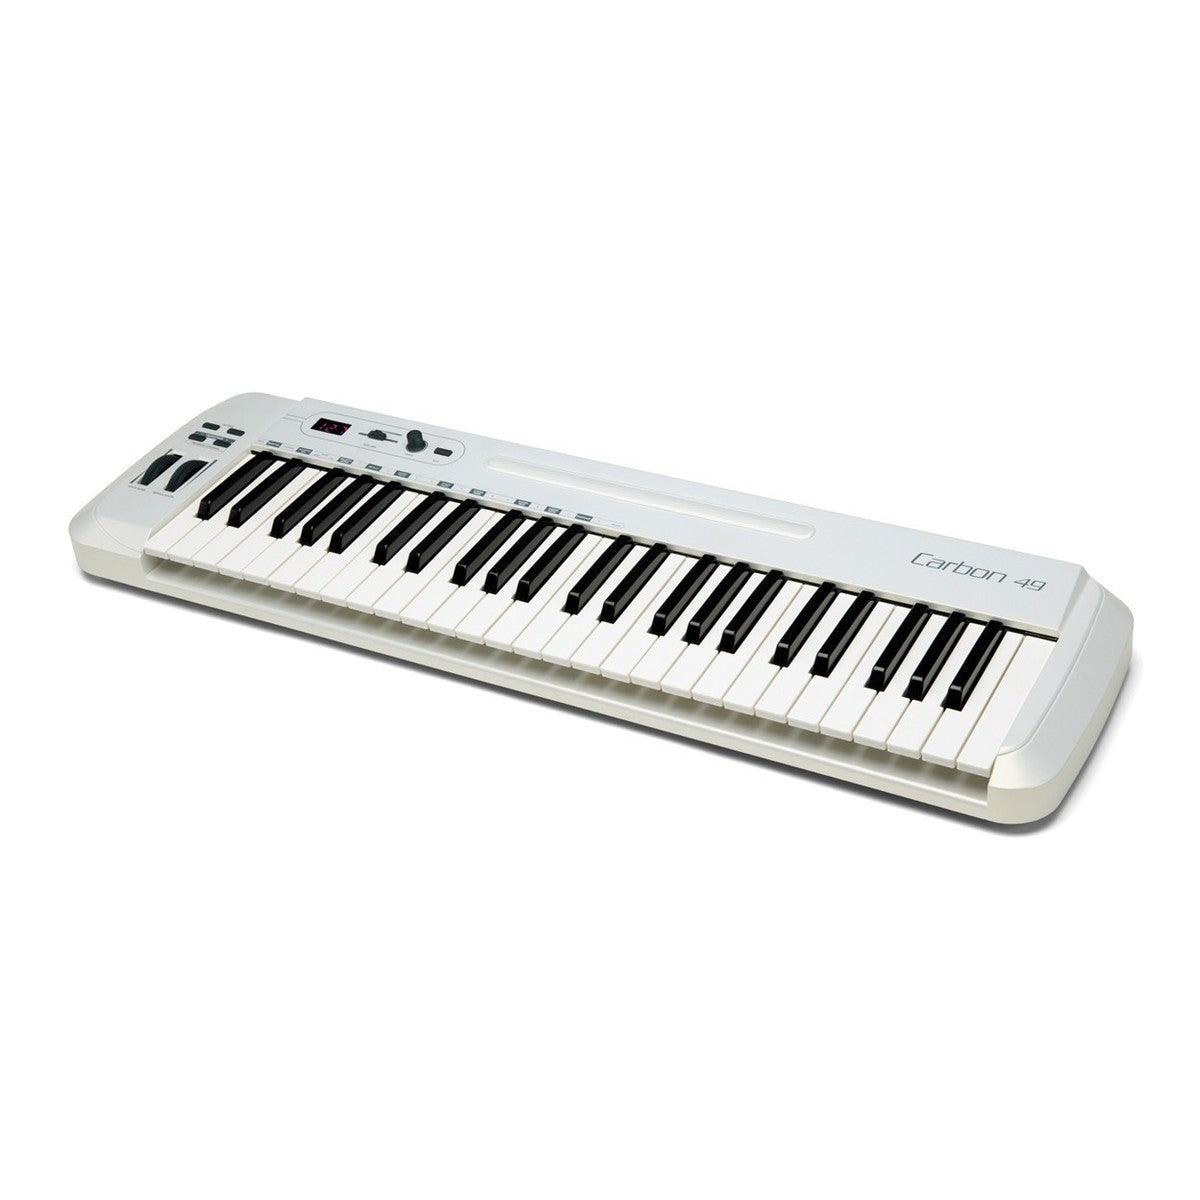 Samson Carbon 49 MIDI Keyboard Controller - DY Pro Audio